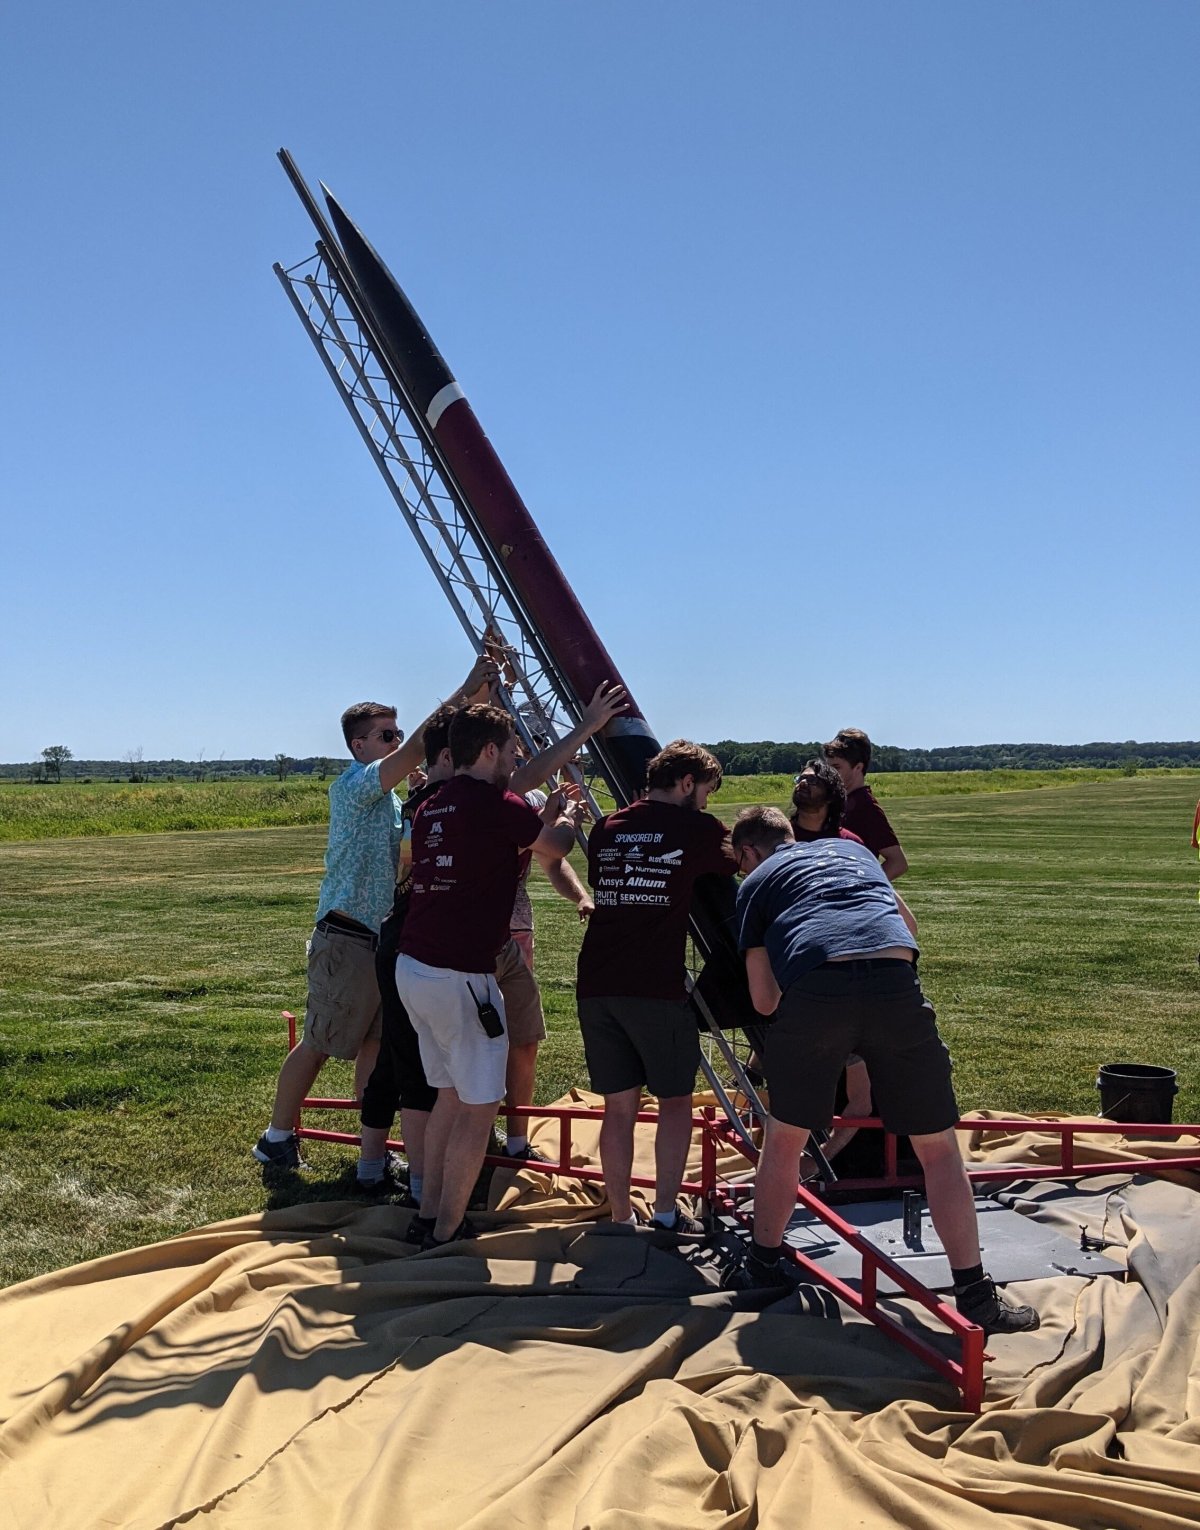 Rocket Team members preparing their rocket for launch